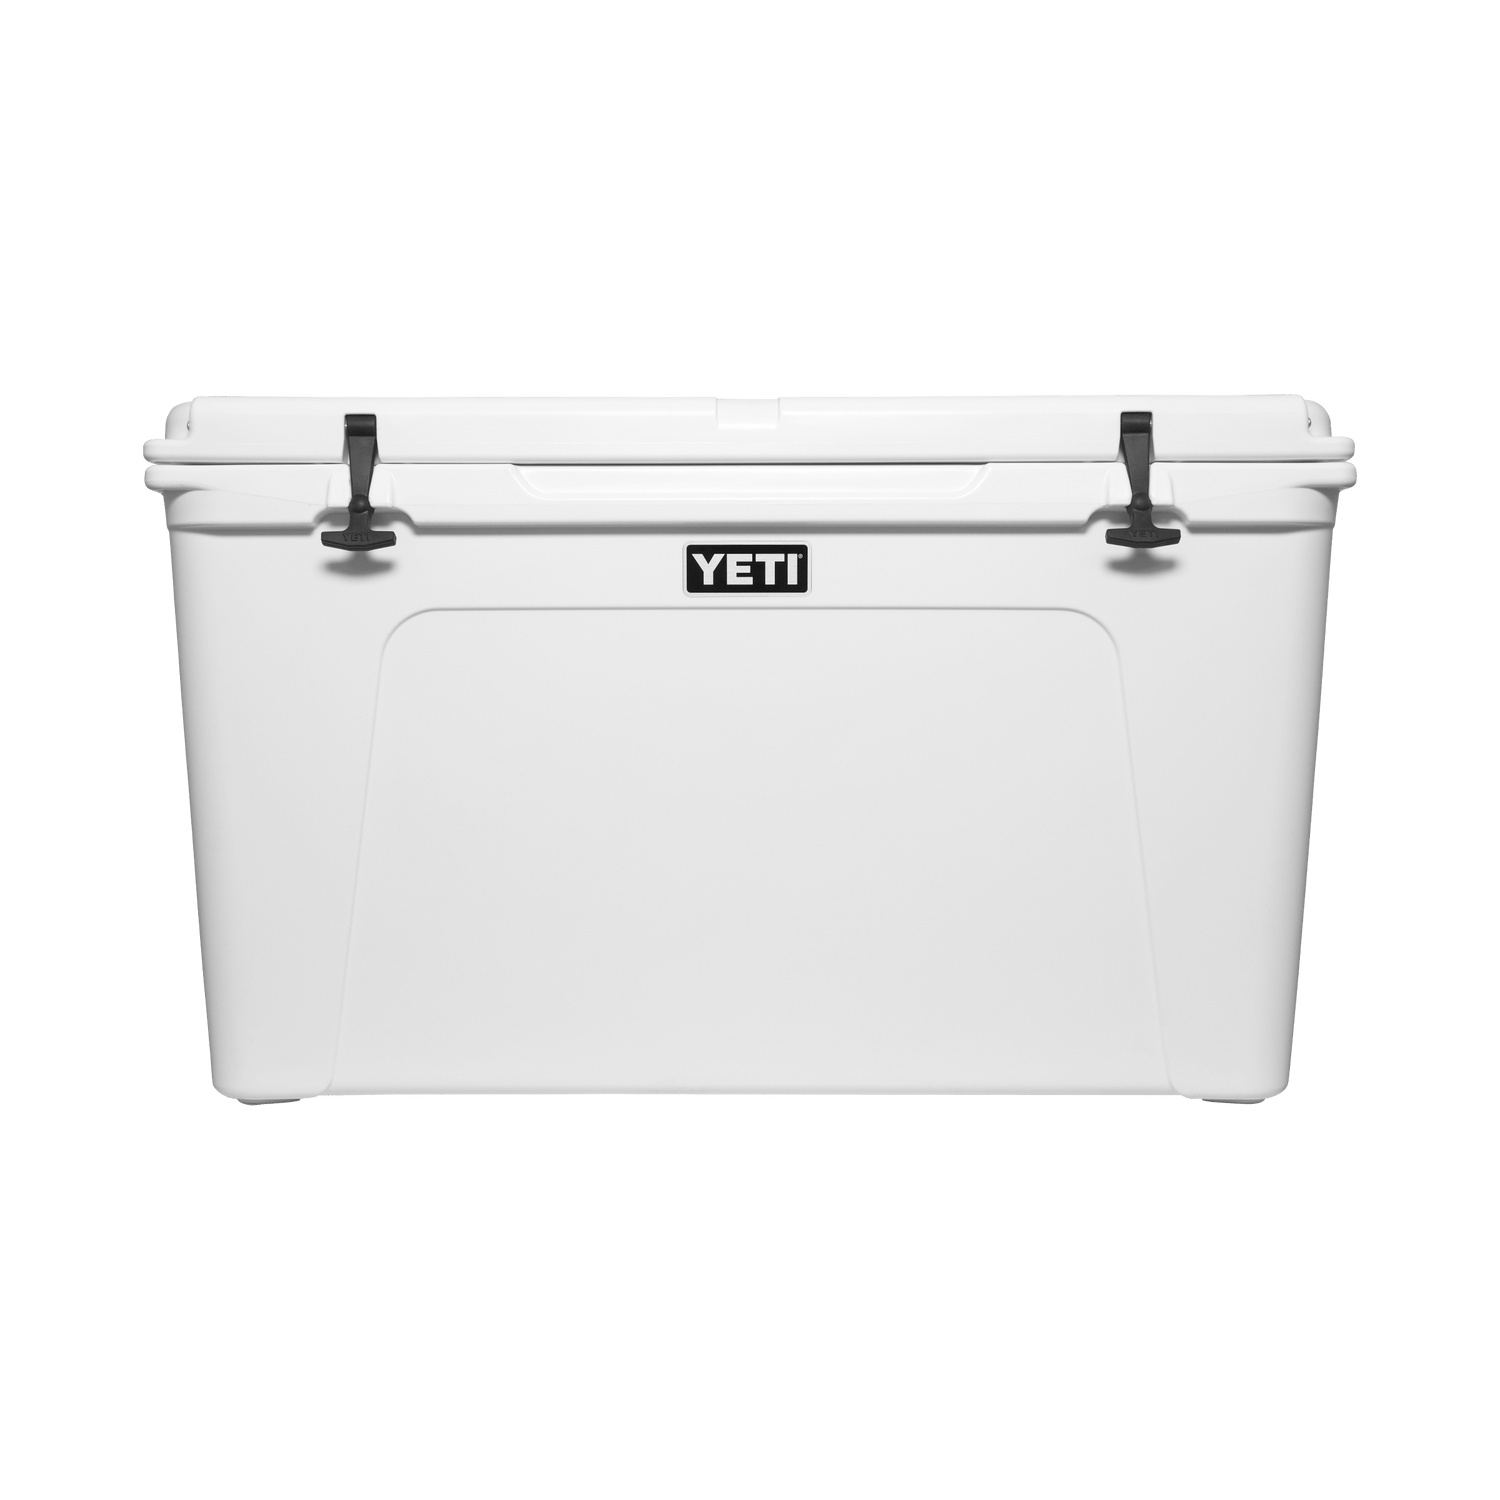 YETI Tundra® 210 Cool Box White